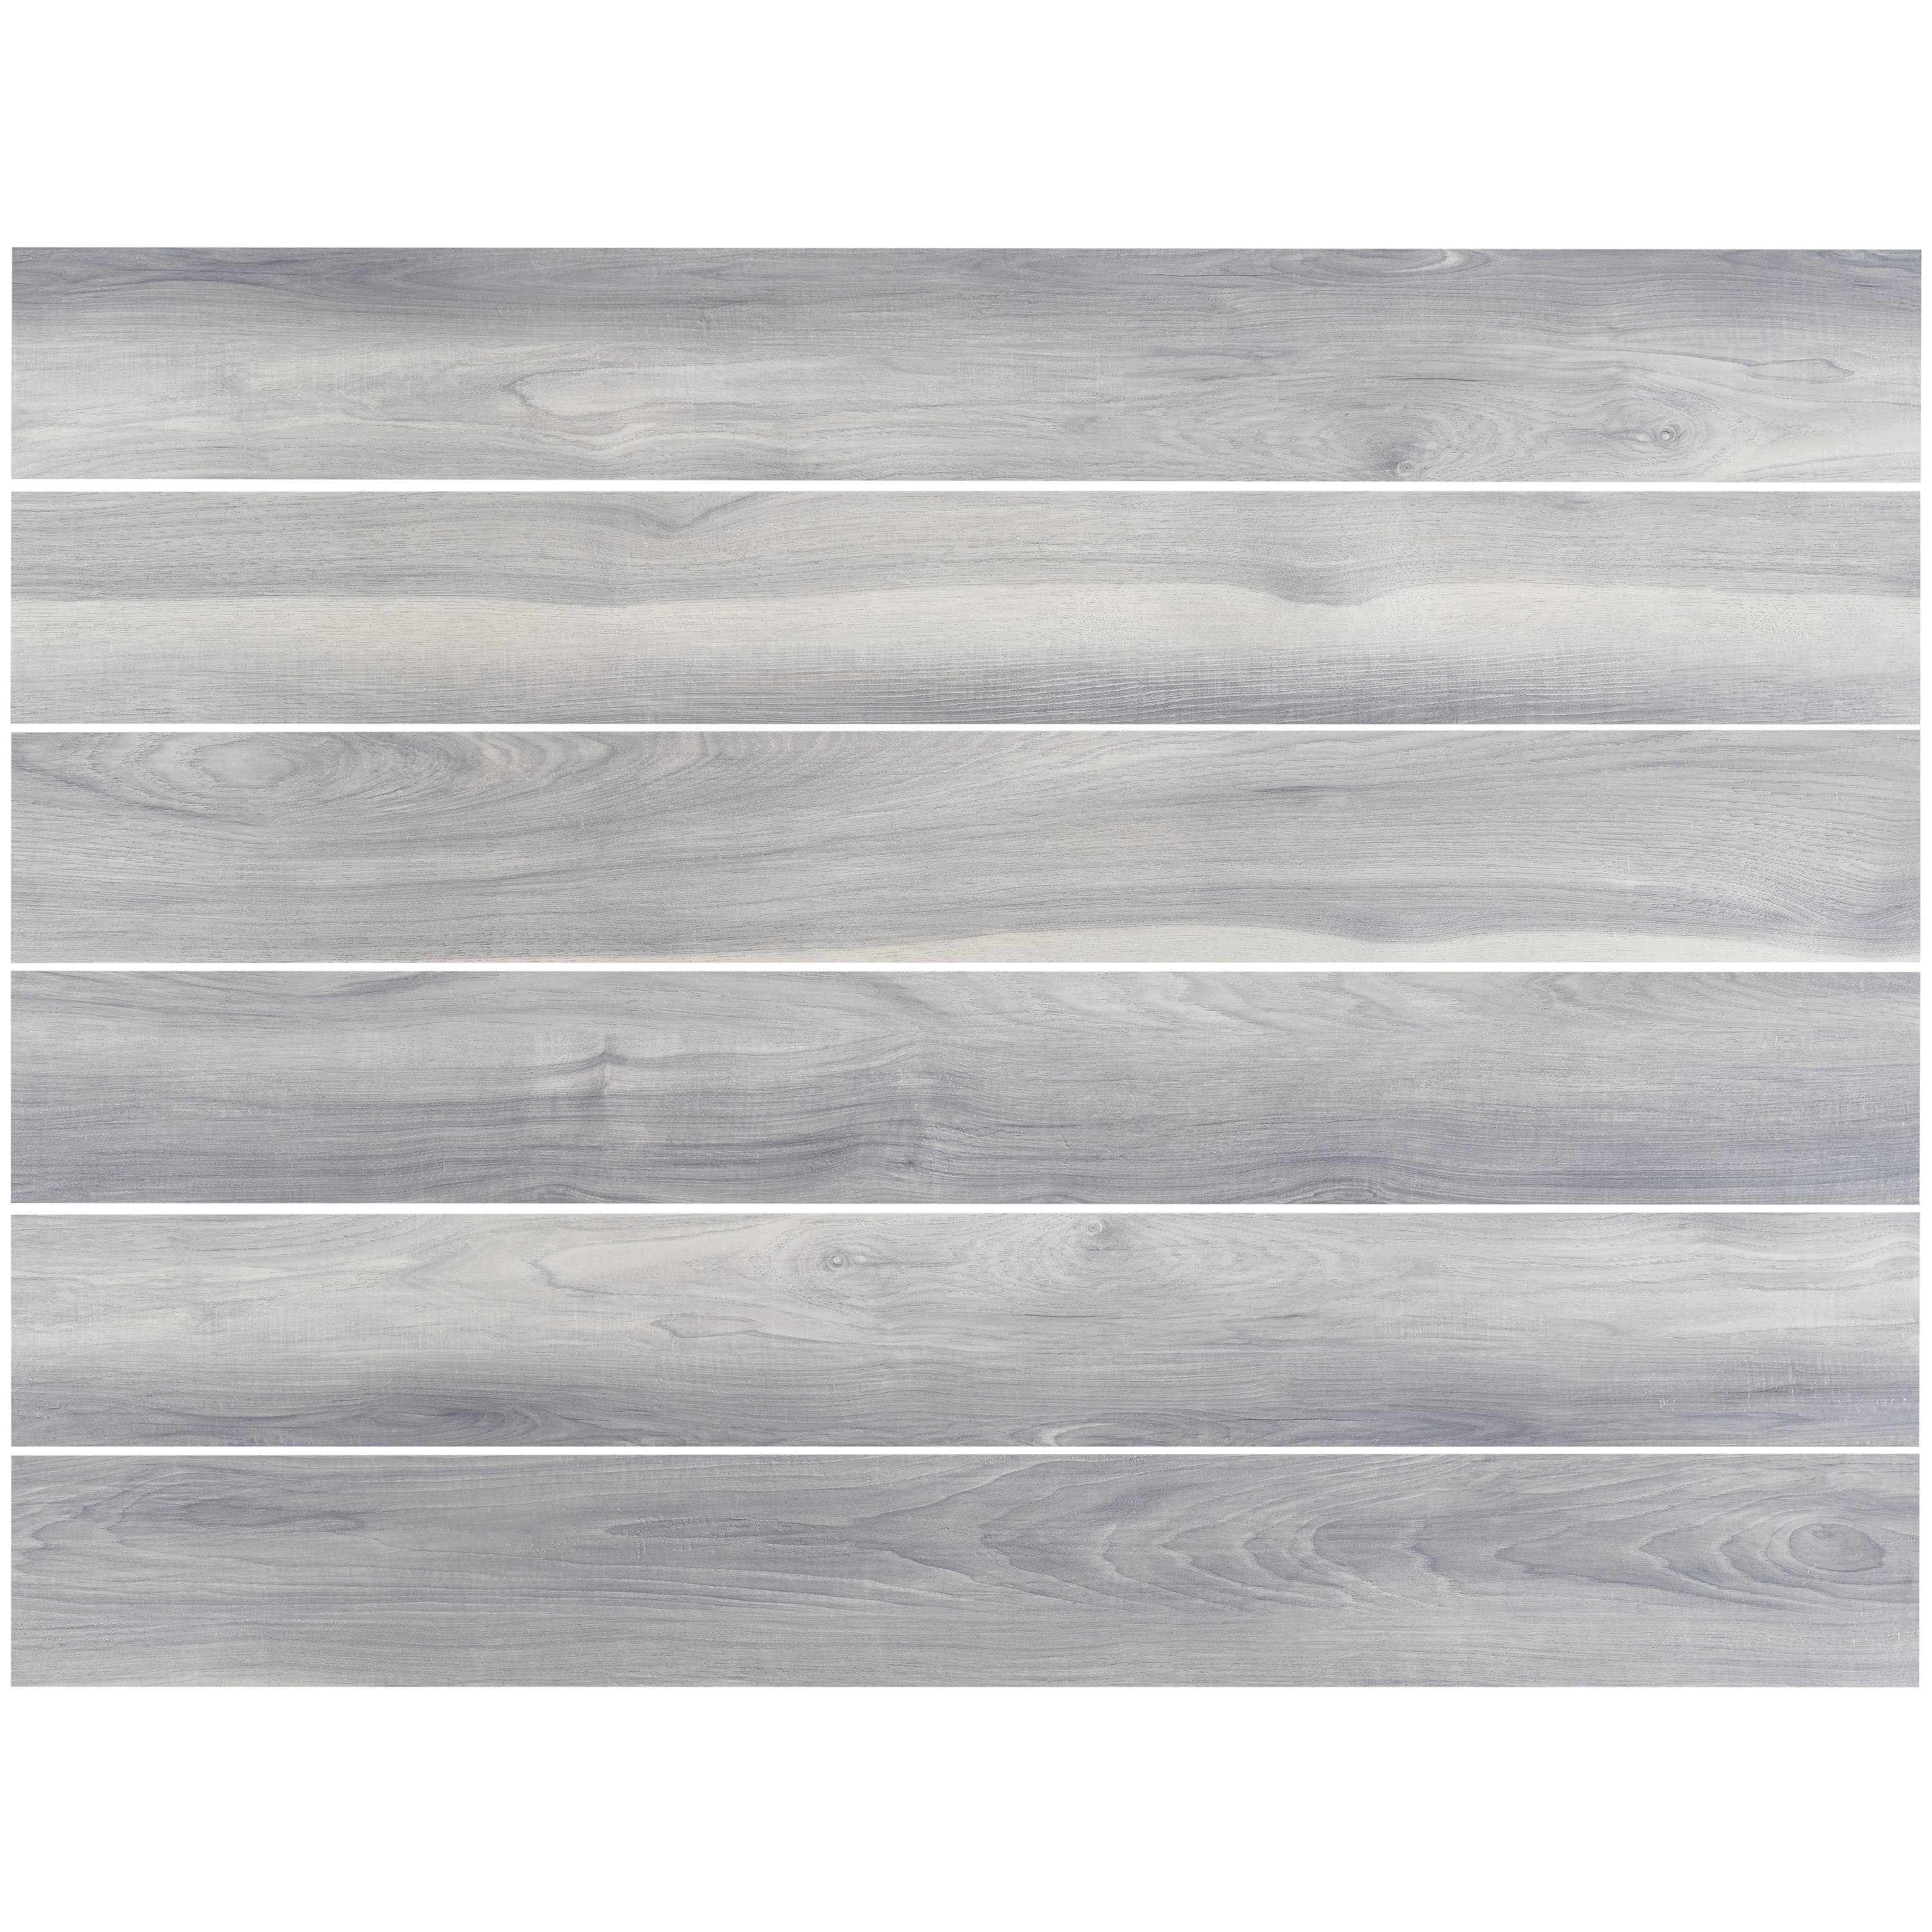 PRICE DROP ALERT - Toli Solid Vinyl Waterproof Flooring - White Sycamore -  6 x 35 - Luxury Vinyl Plank 1911 SQFT Price : 1.09